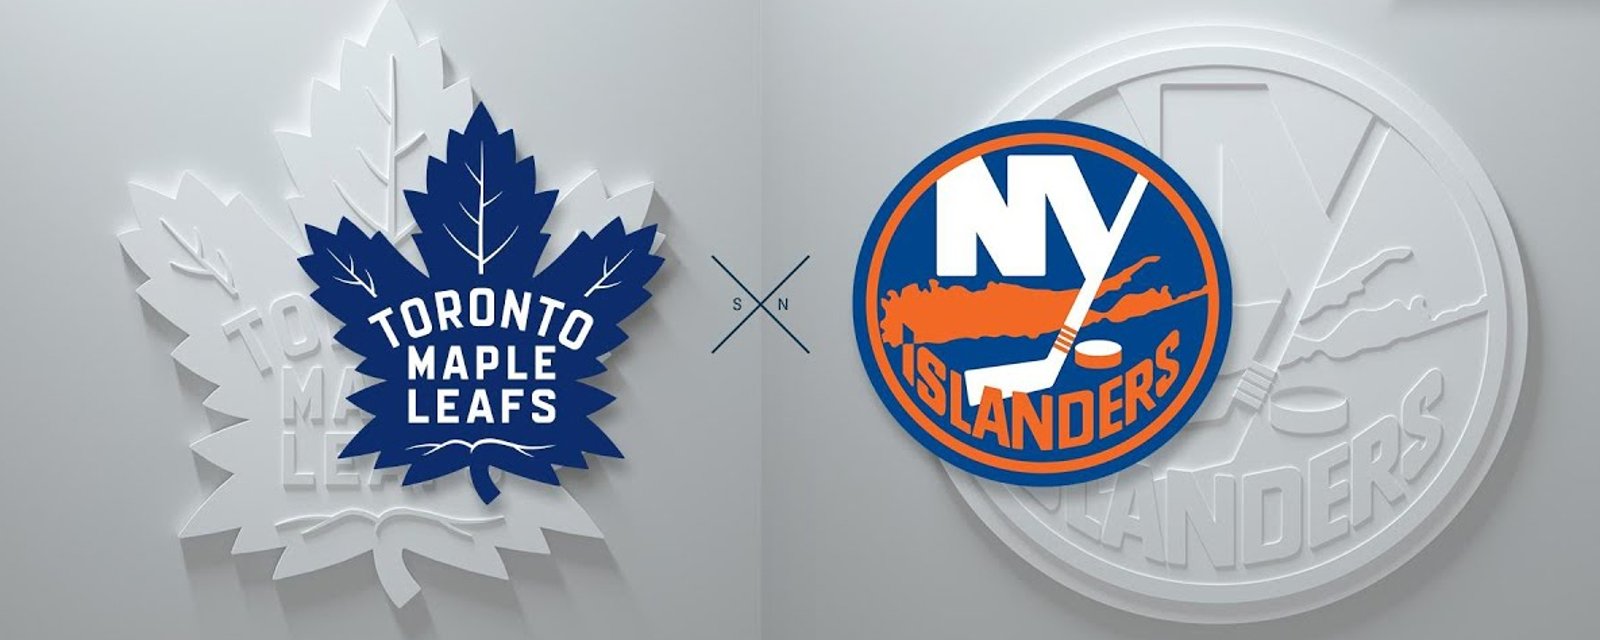 Trade brewing between Maple Leafs and Islanders!